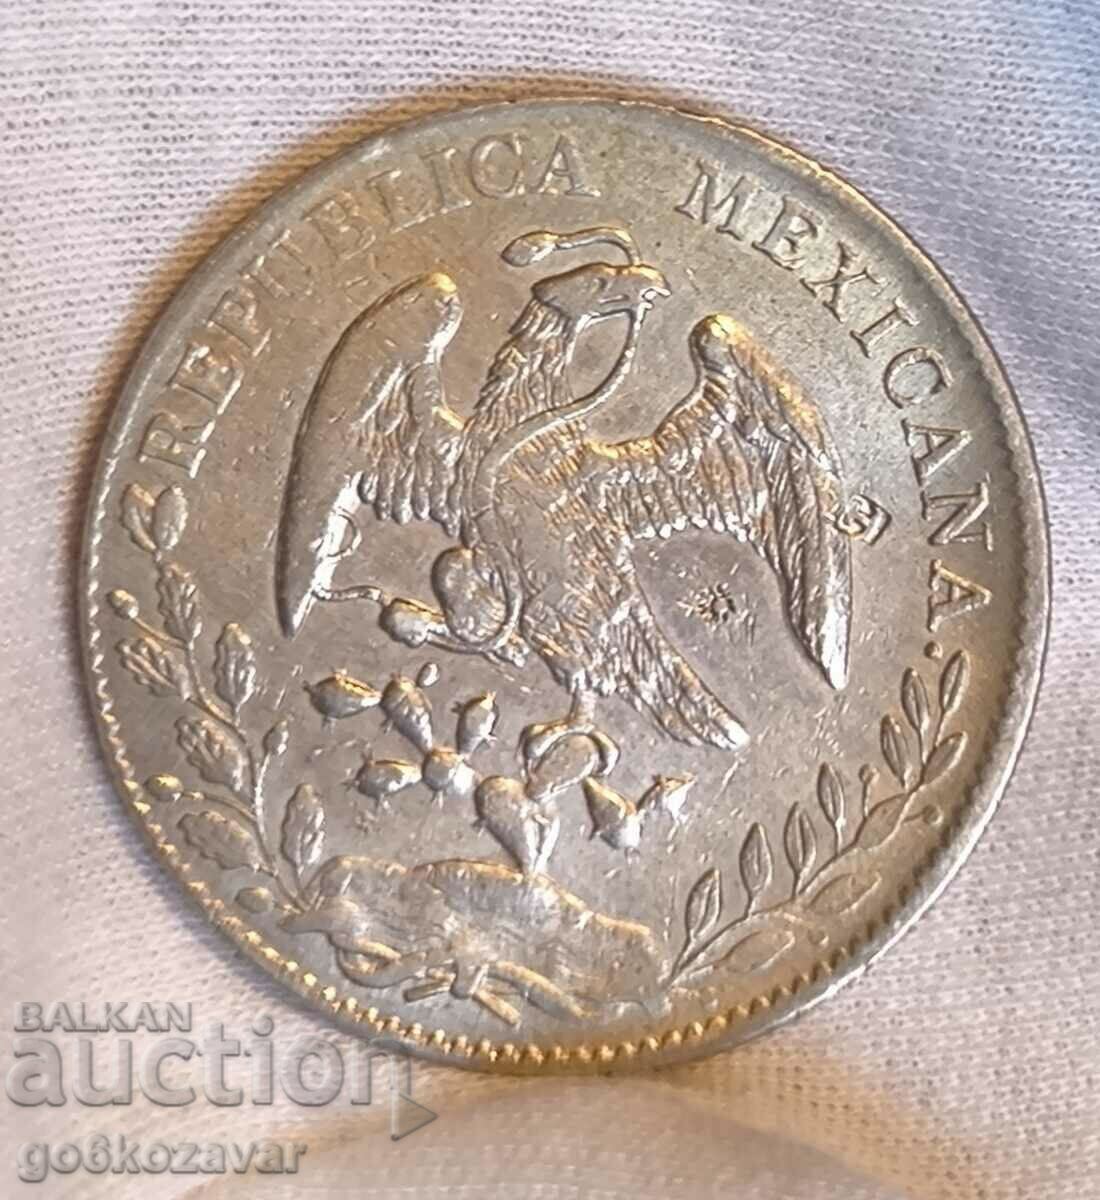 Taler 8 reales 1893 Silver Mexico Rare! Counter brands!